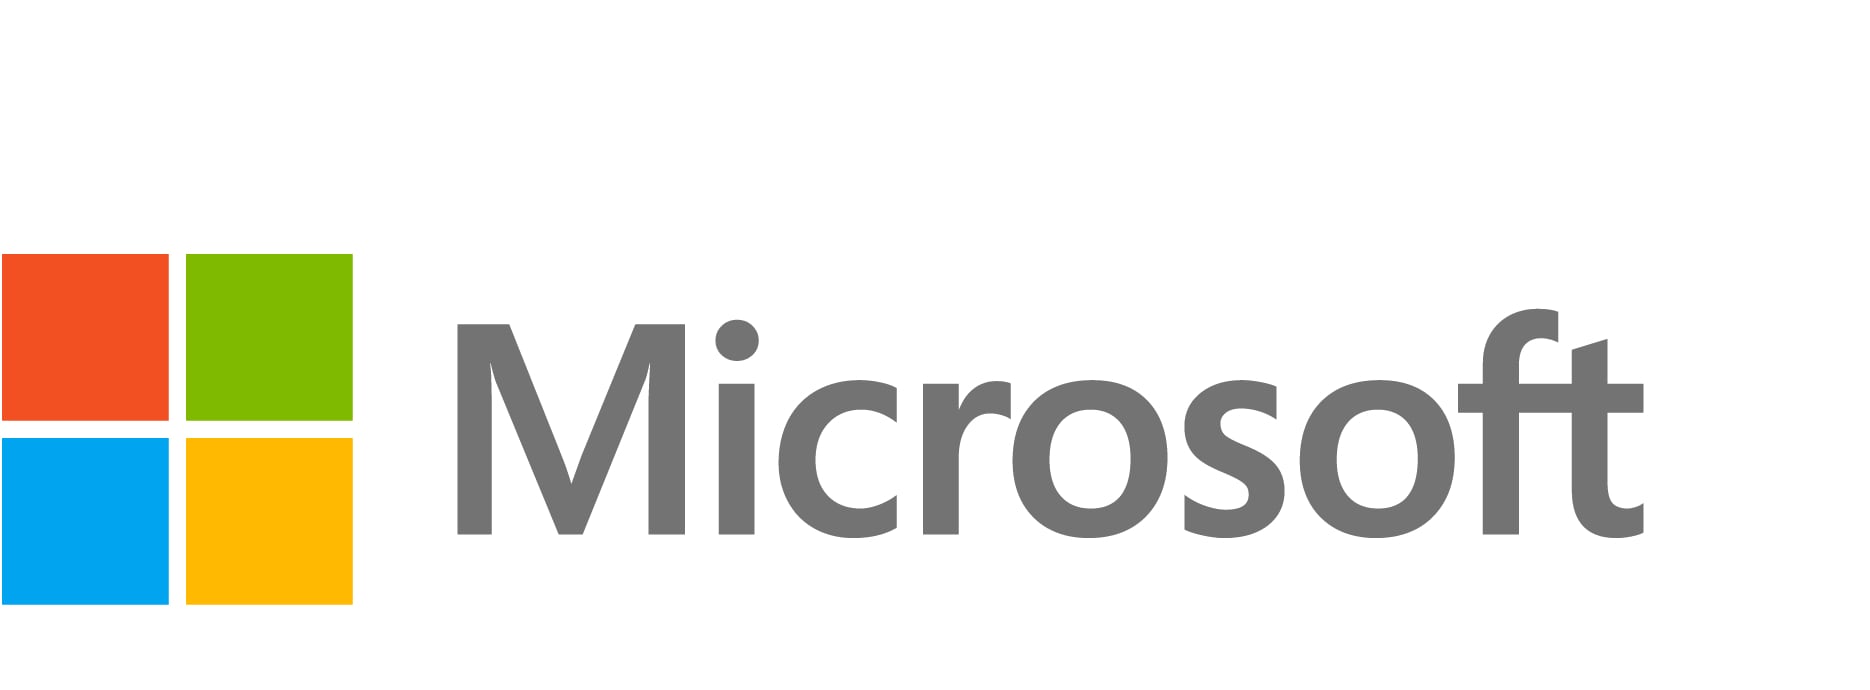 Microsoft Teams Phone Standard - subscription license - 1 user